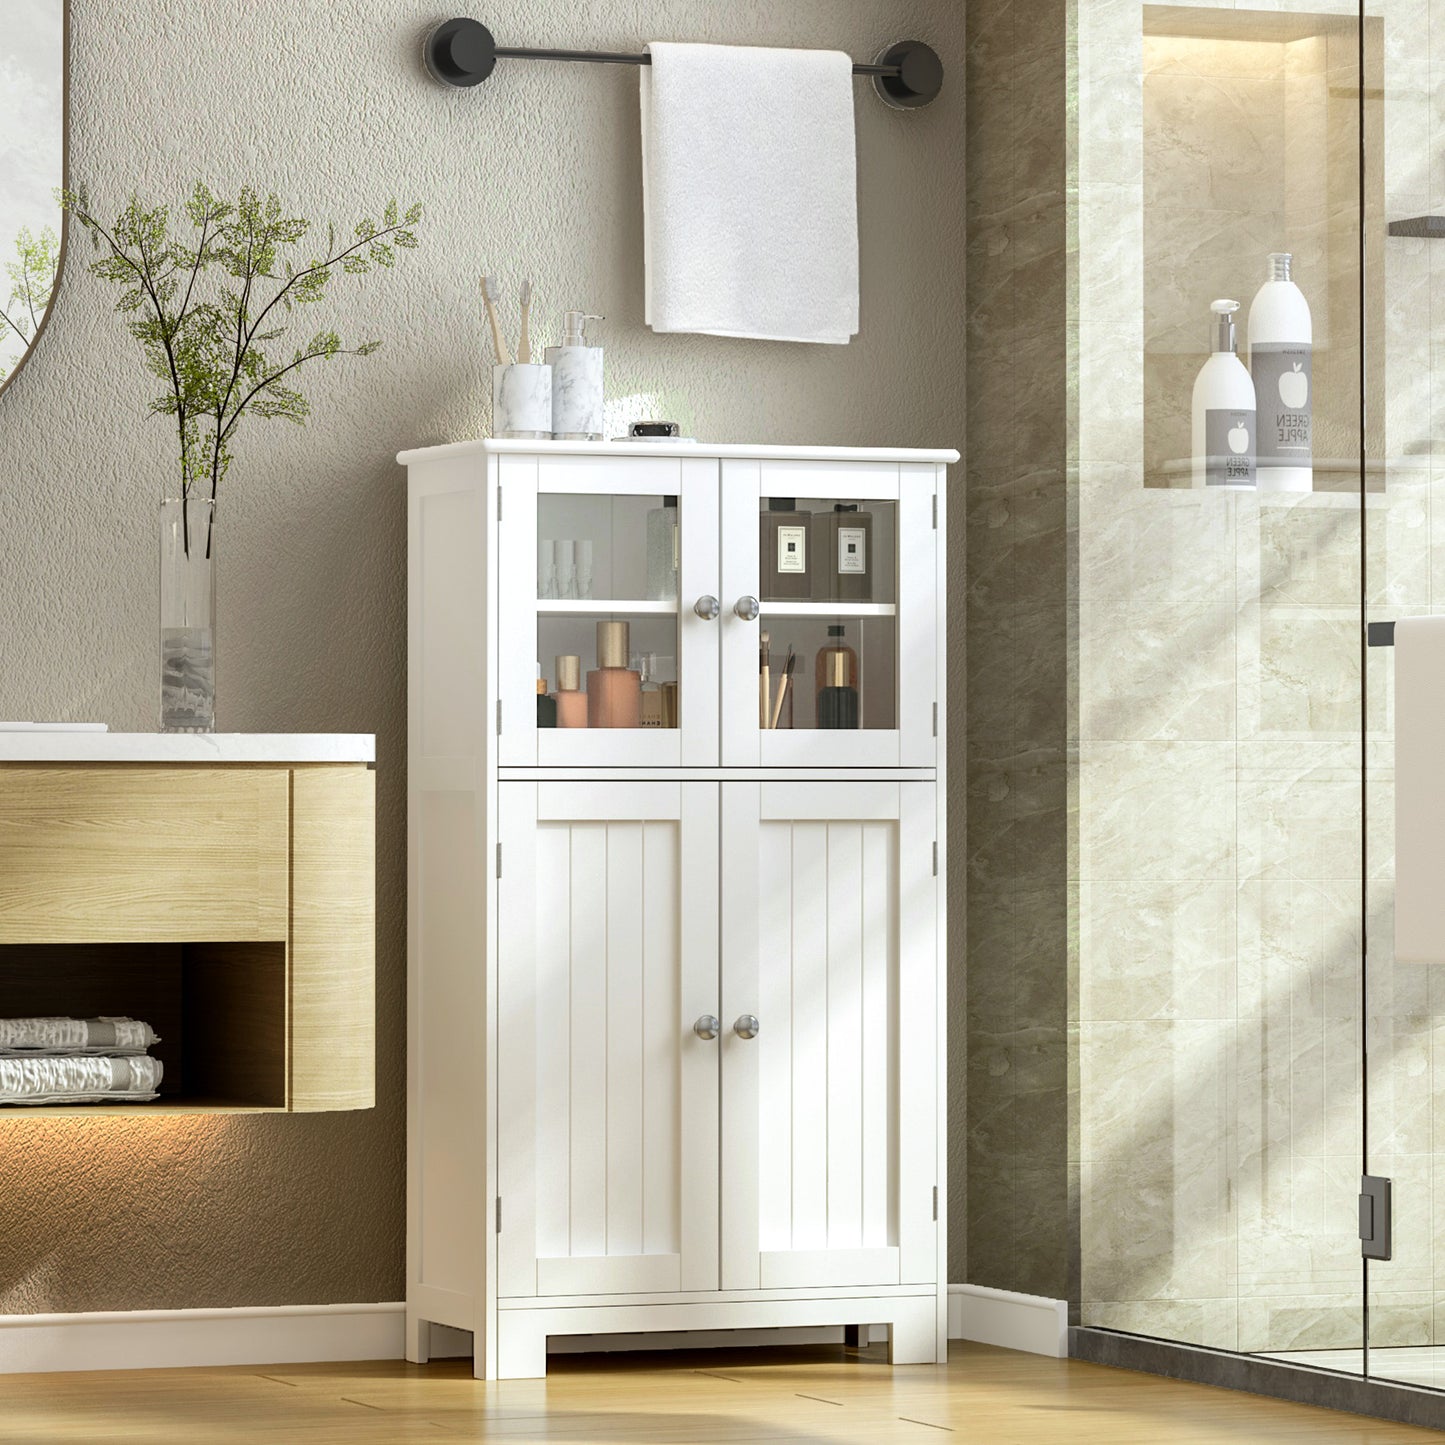 Soges 4 Door Kitchen Storage Cabinet, Wooden Food Cutlery Locker with Adjustable Shelves, White